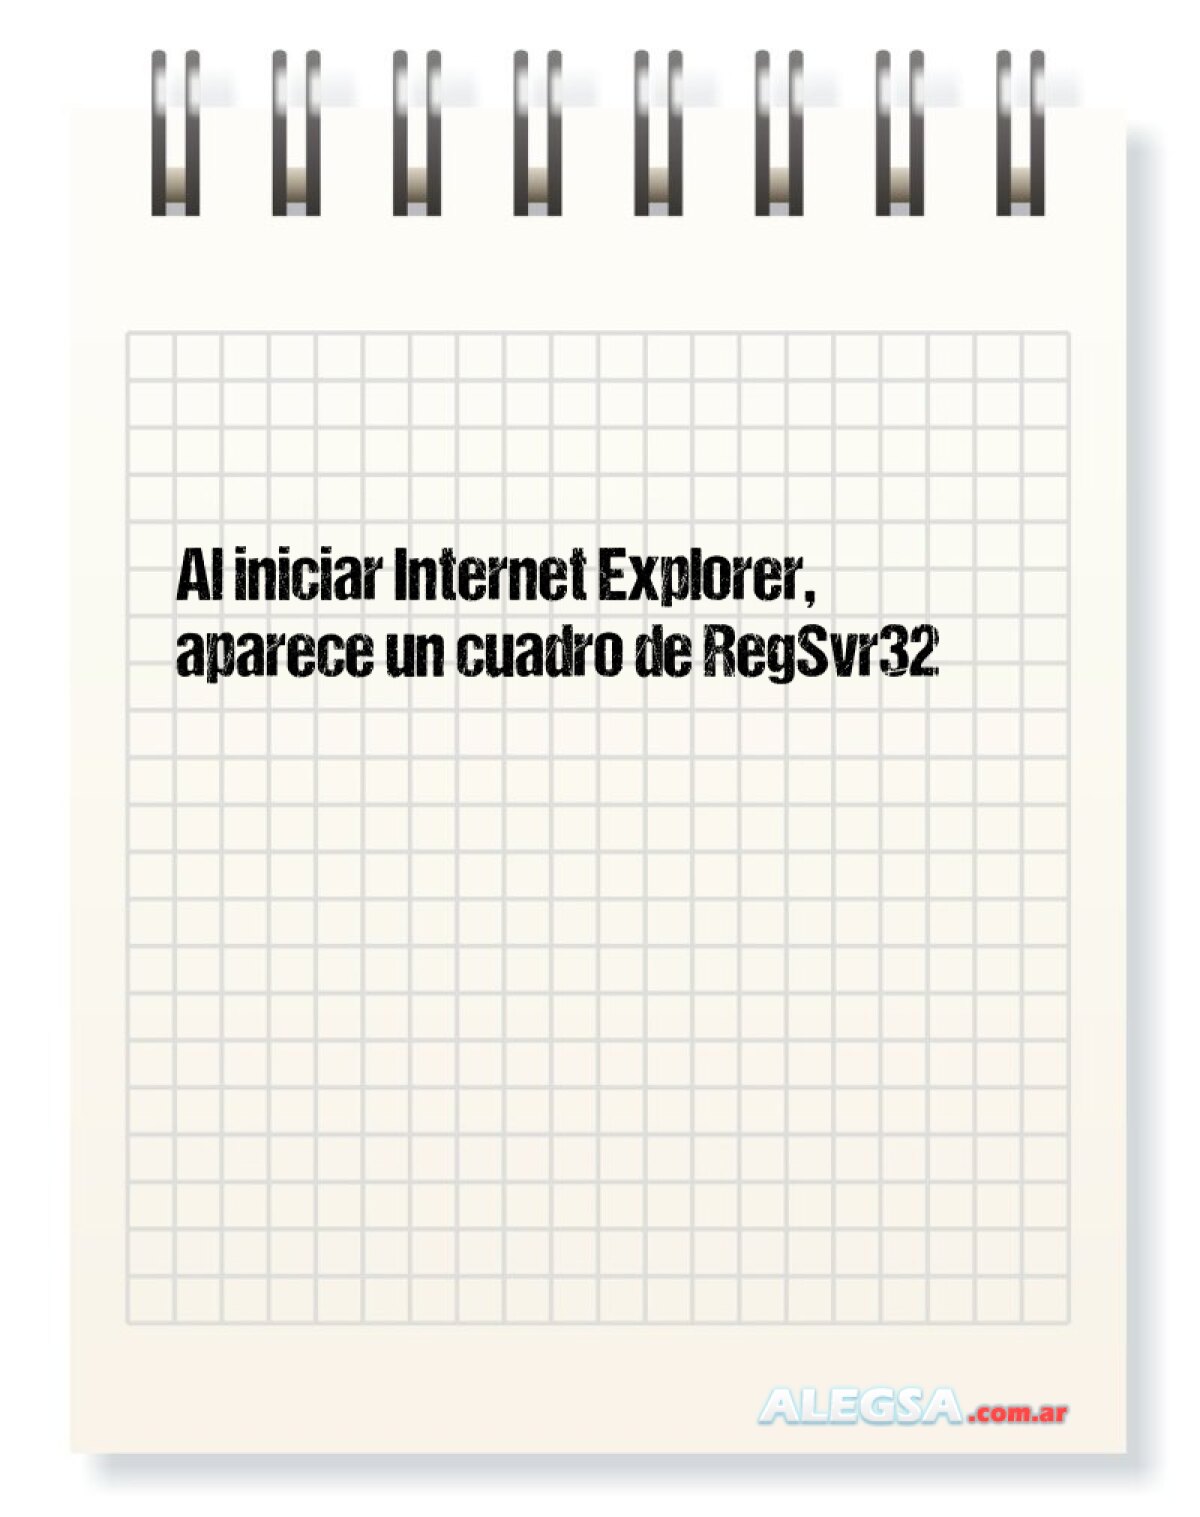 Al iniciar Internet Explorer, aparece un cuadro de RegSvr32